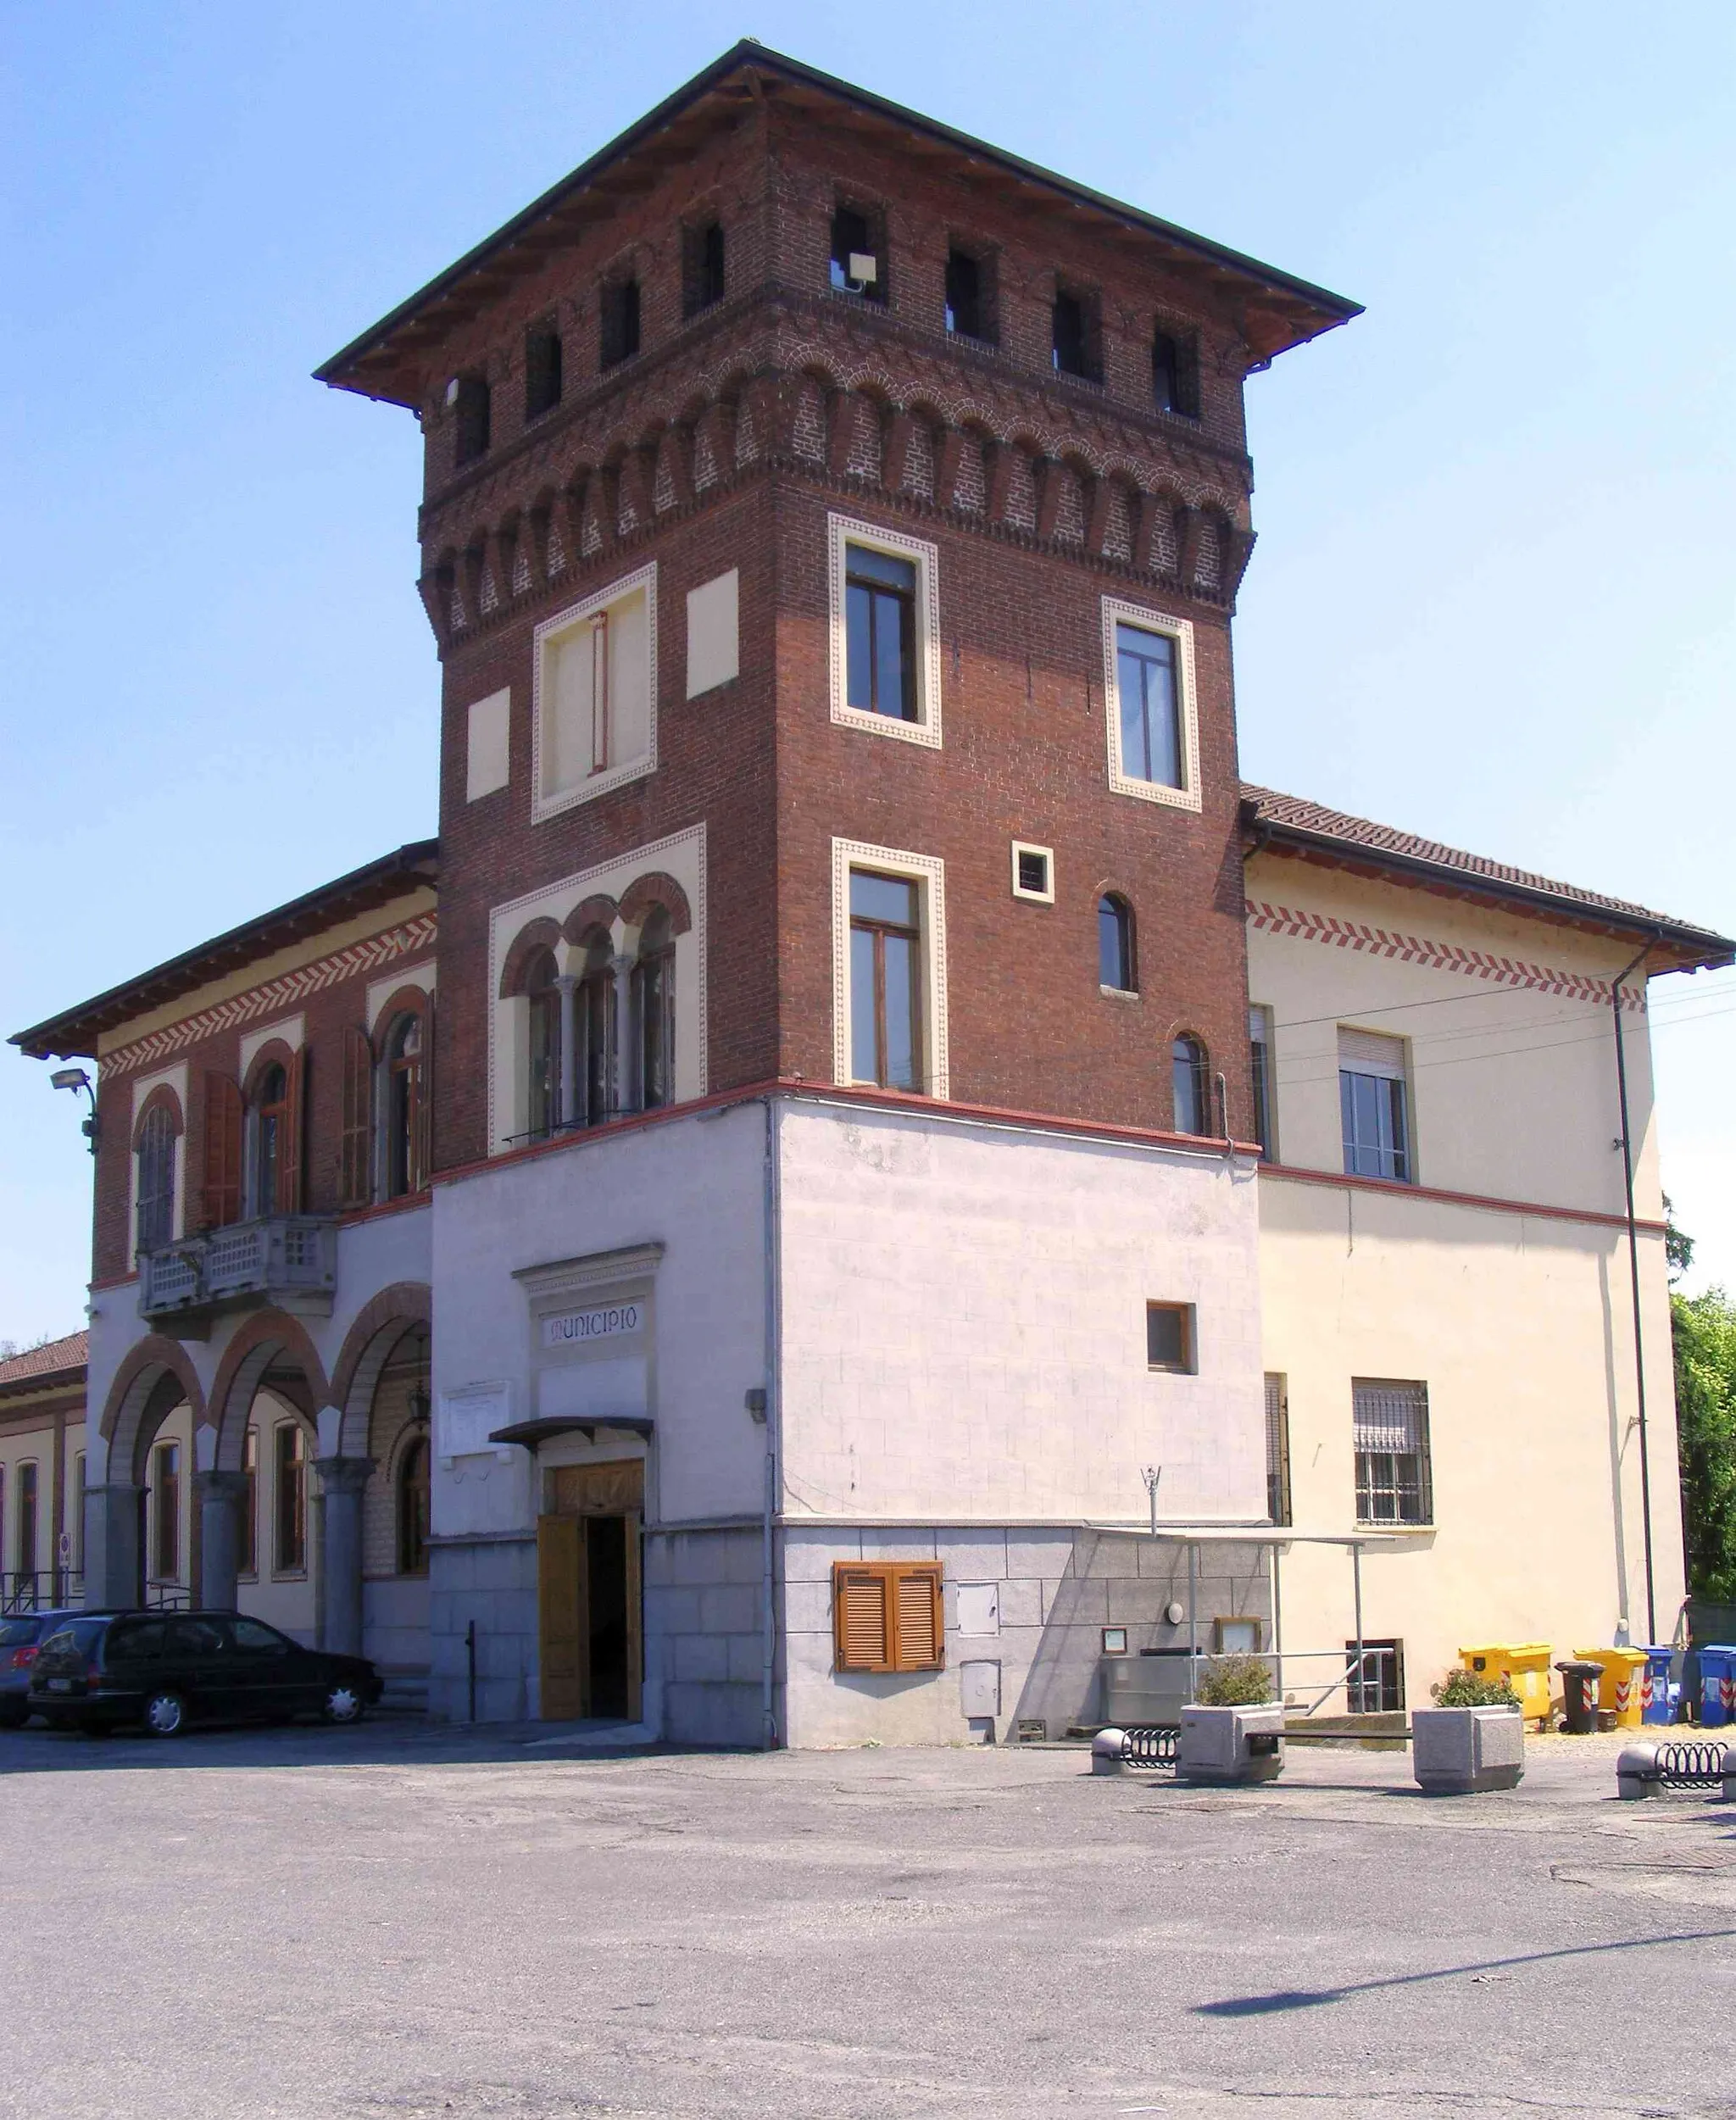 Image of Torrazza Piemonte